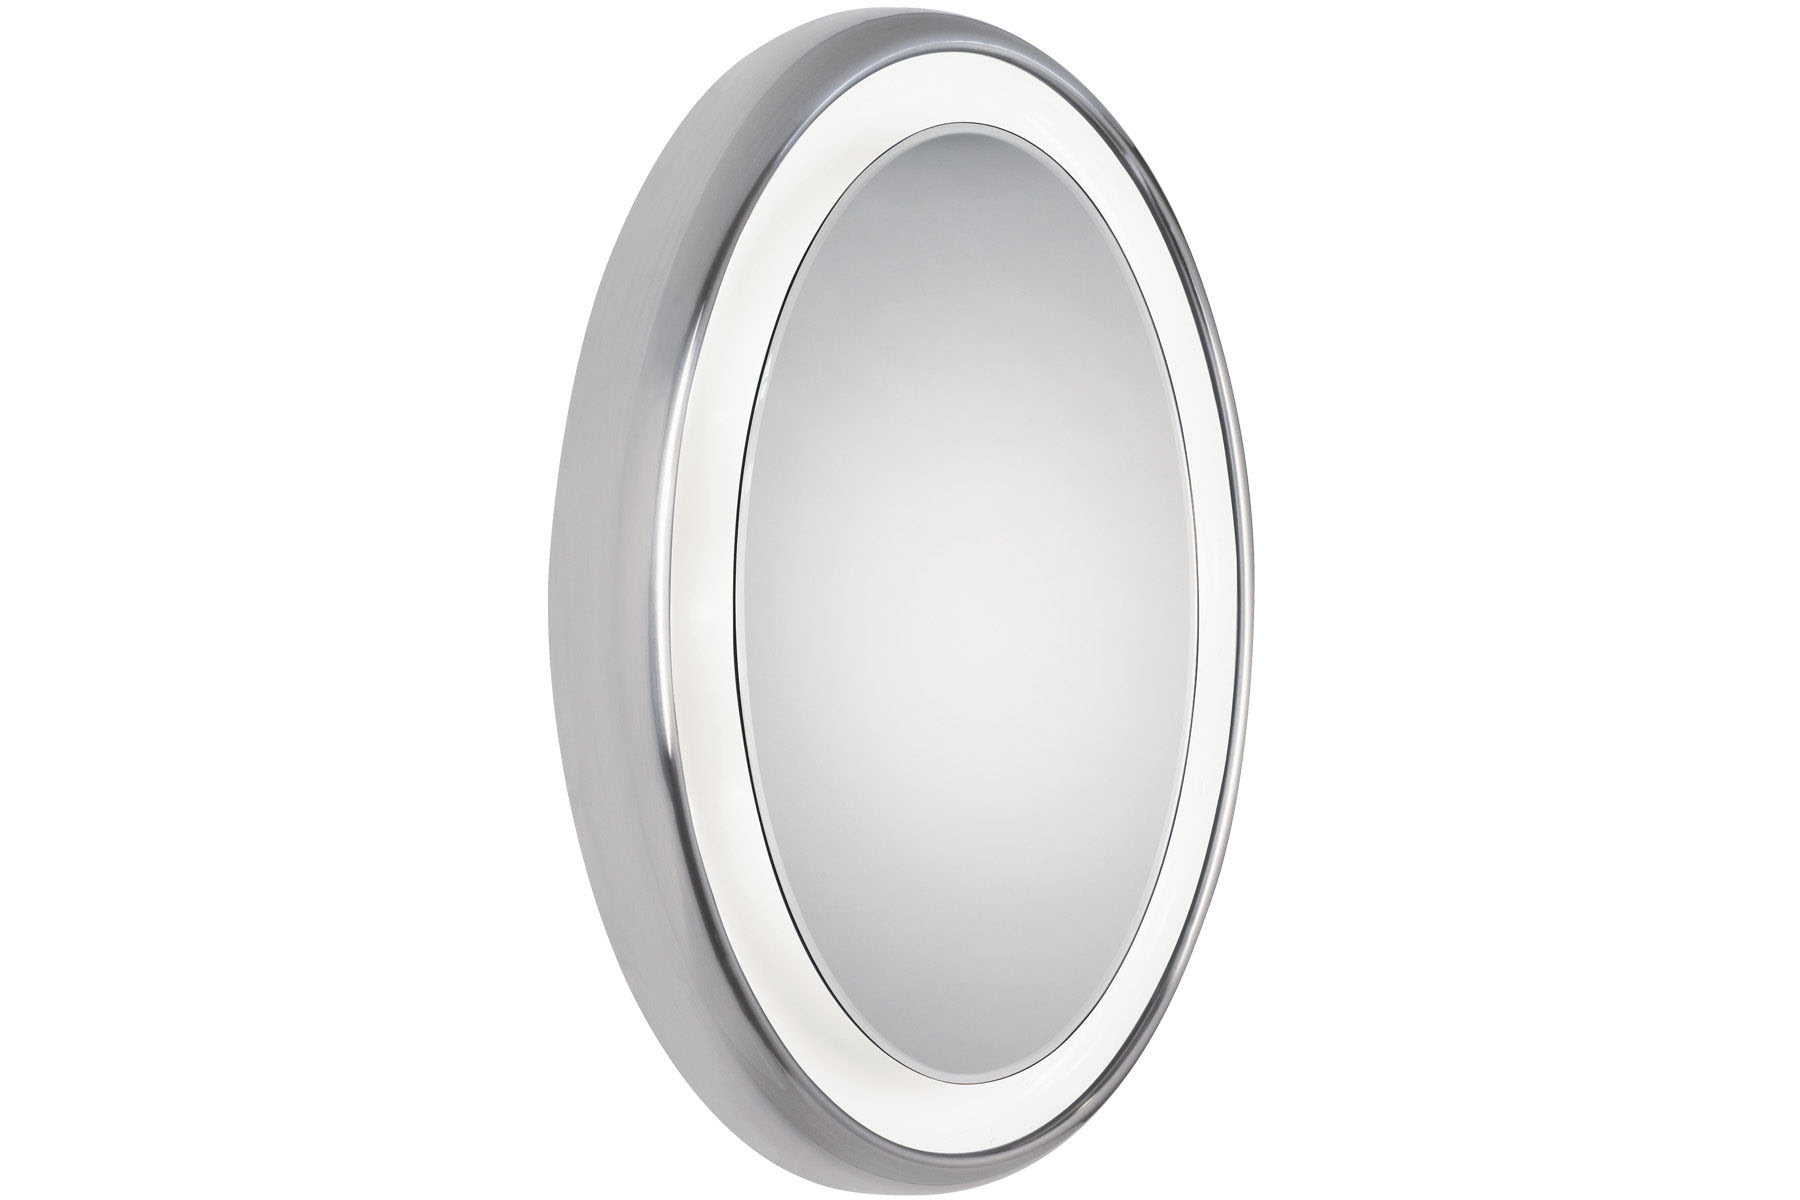 Illuminated bathroom mirror - TIGRIS MIRROR OVAL - TECH LIGHTING